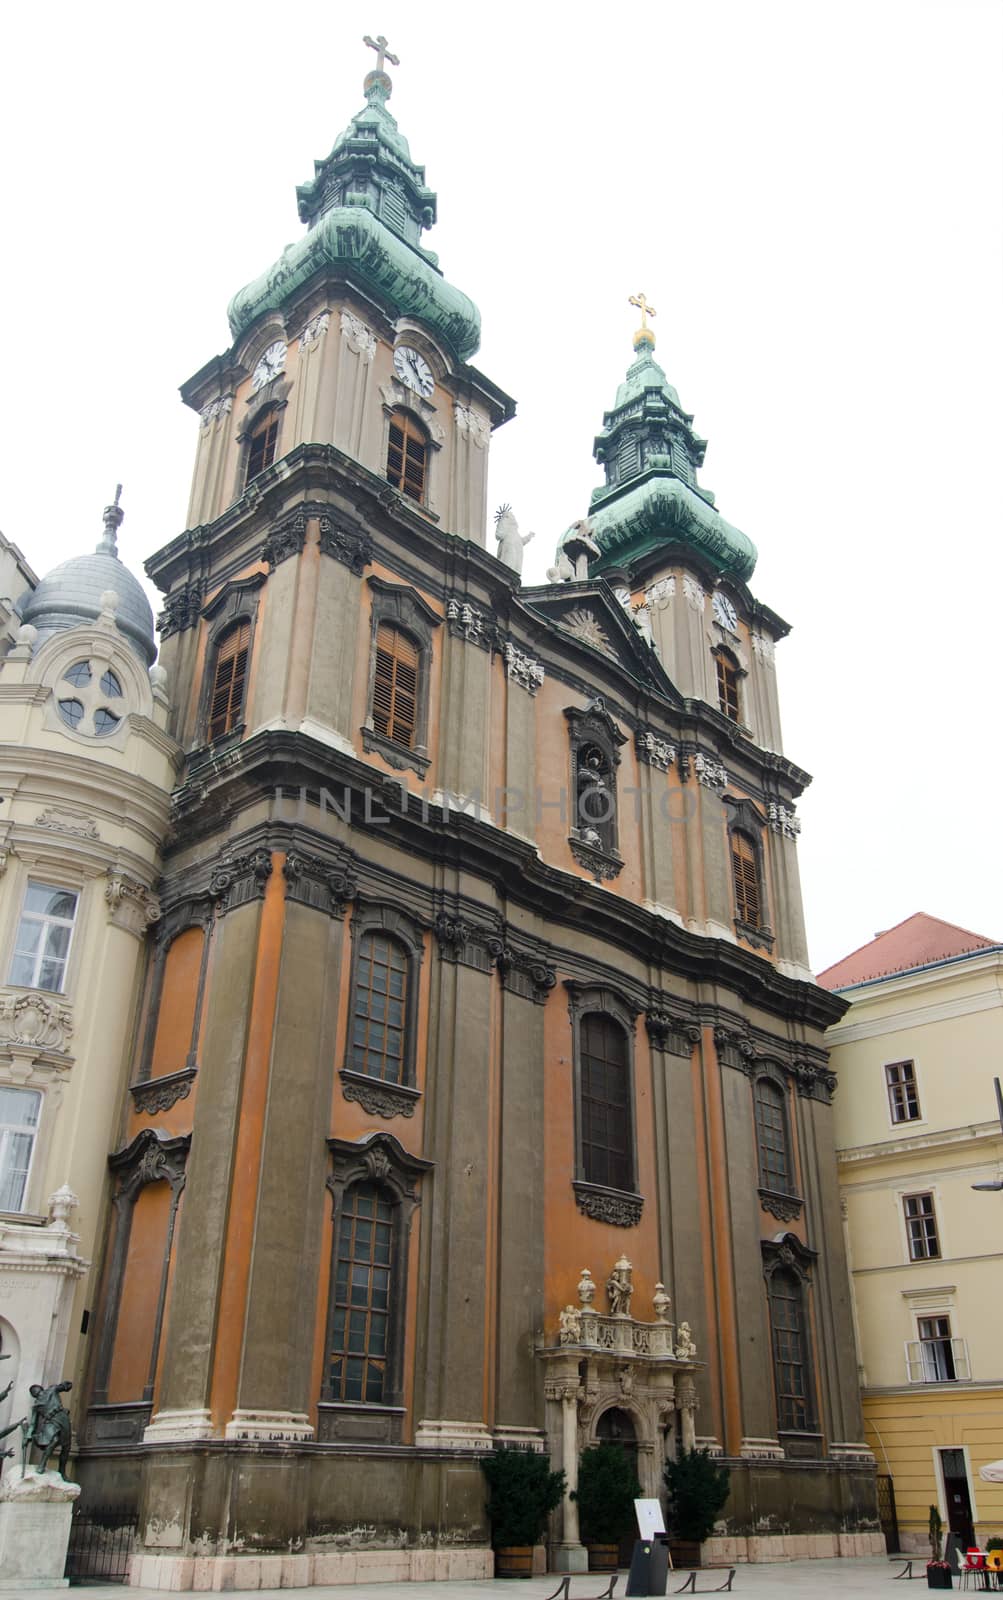 University church (Egyetemi Templom) in Budapest, Hungary by sarkao